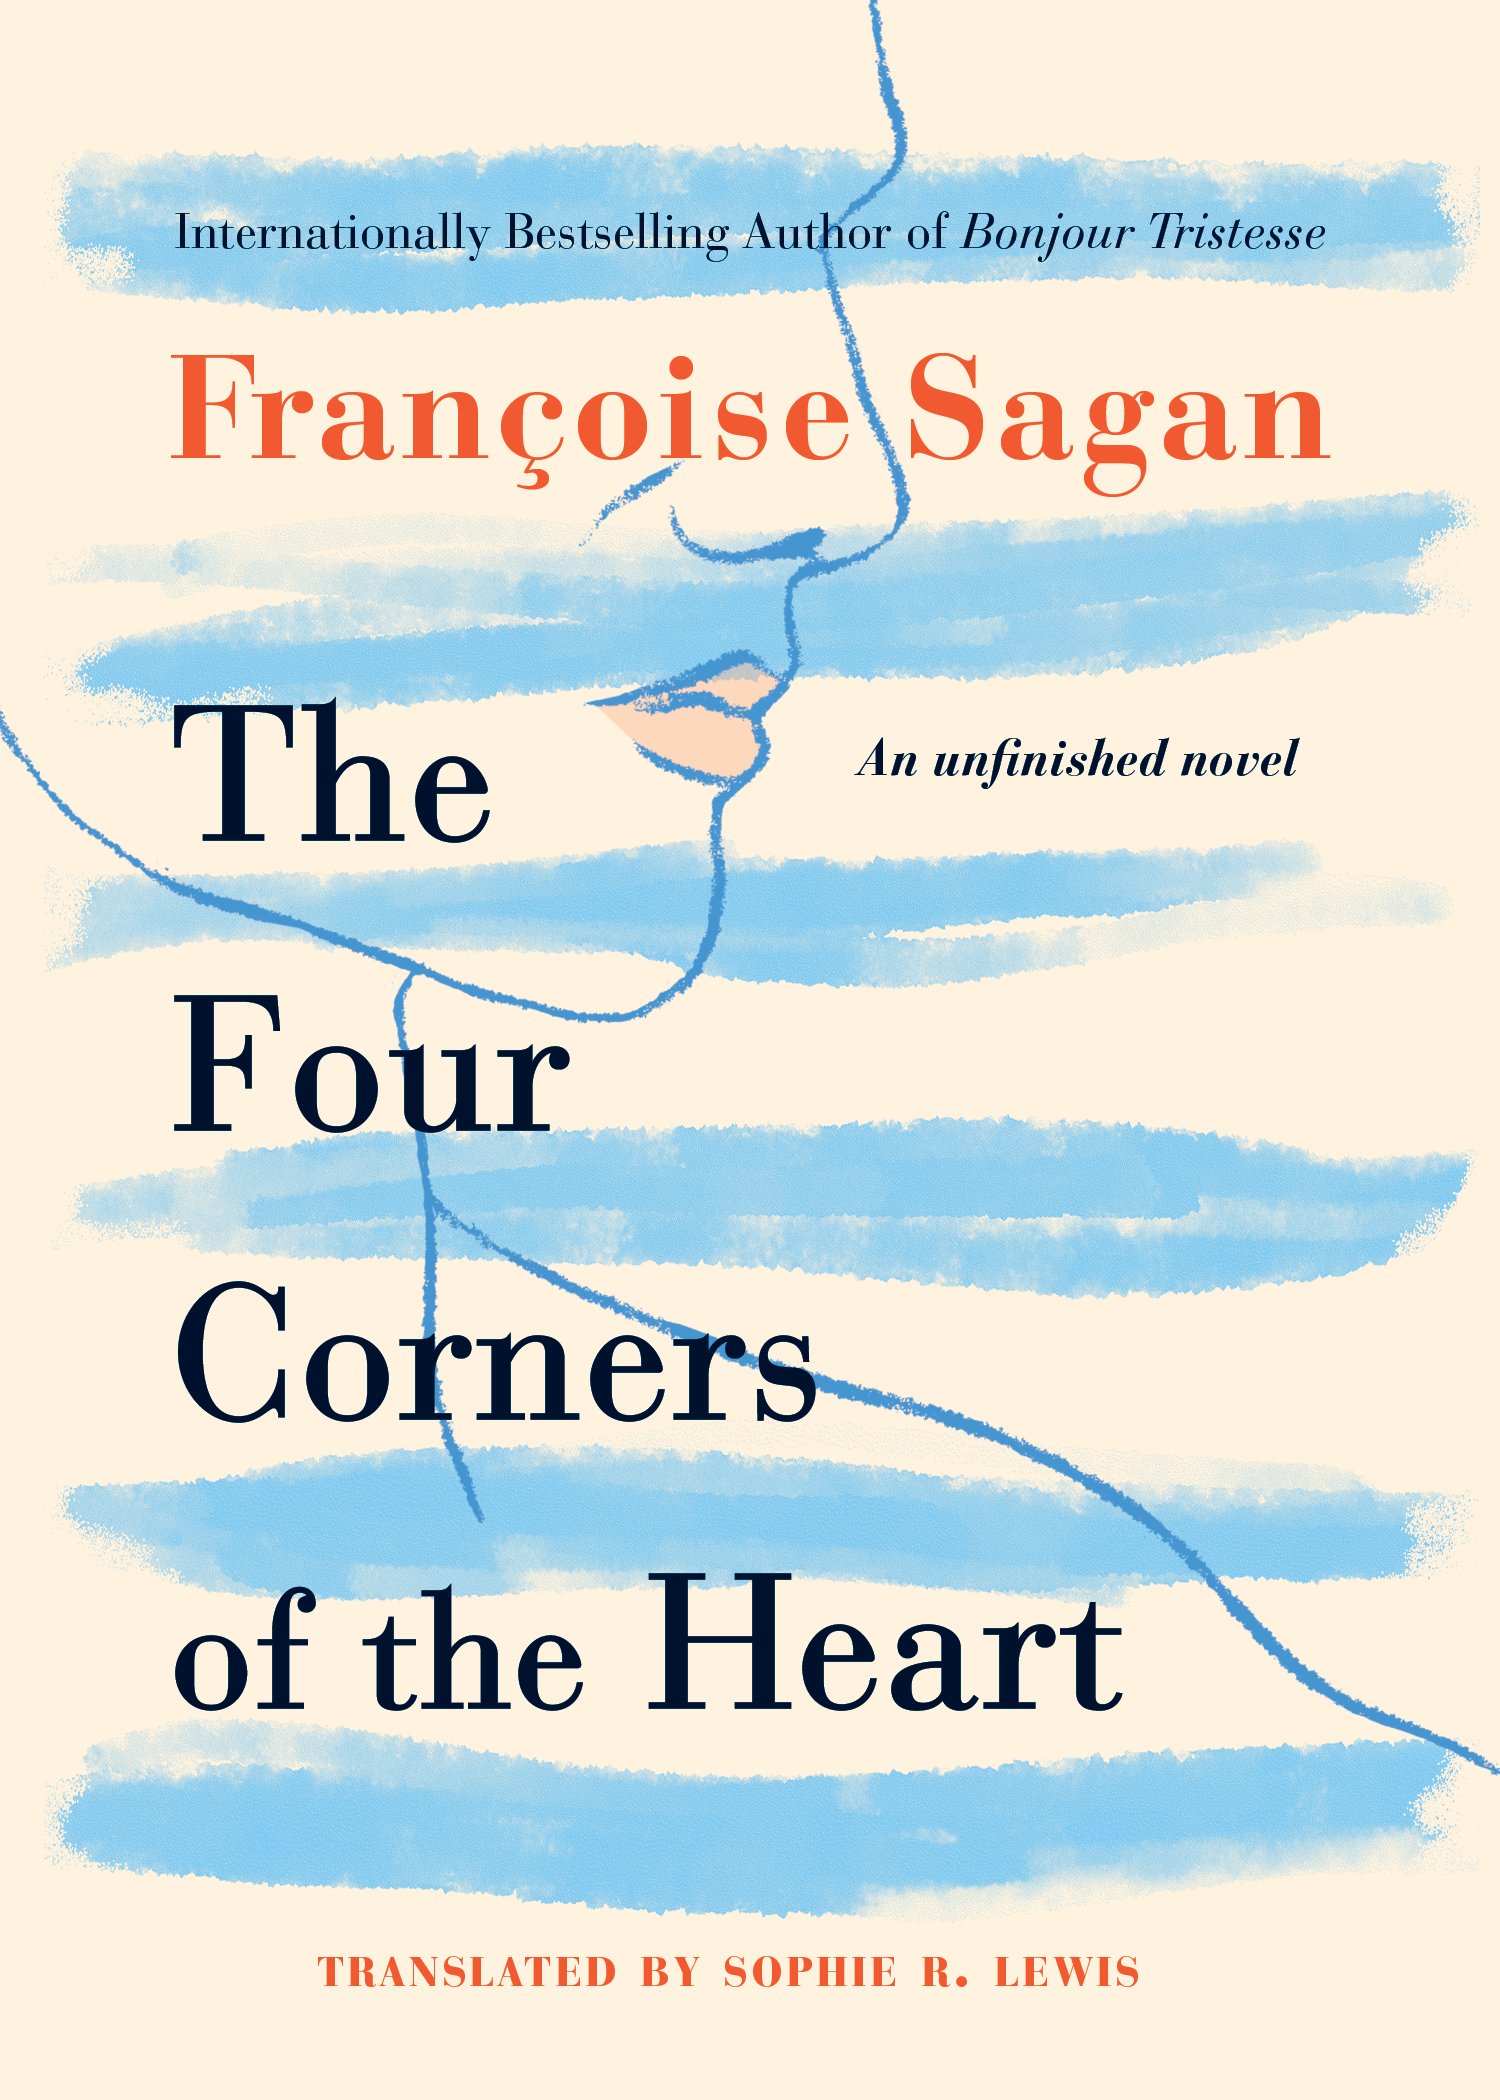 Sagan_The Four Corners of the Heart-29554-FT-v1.jpg